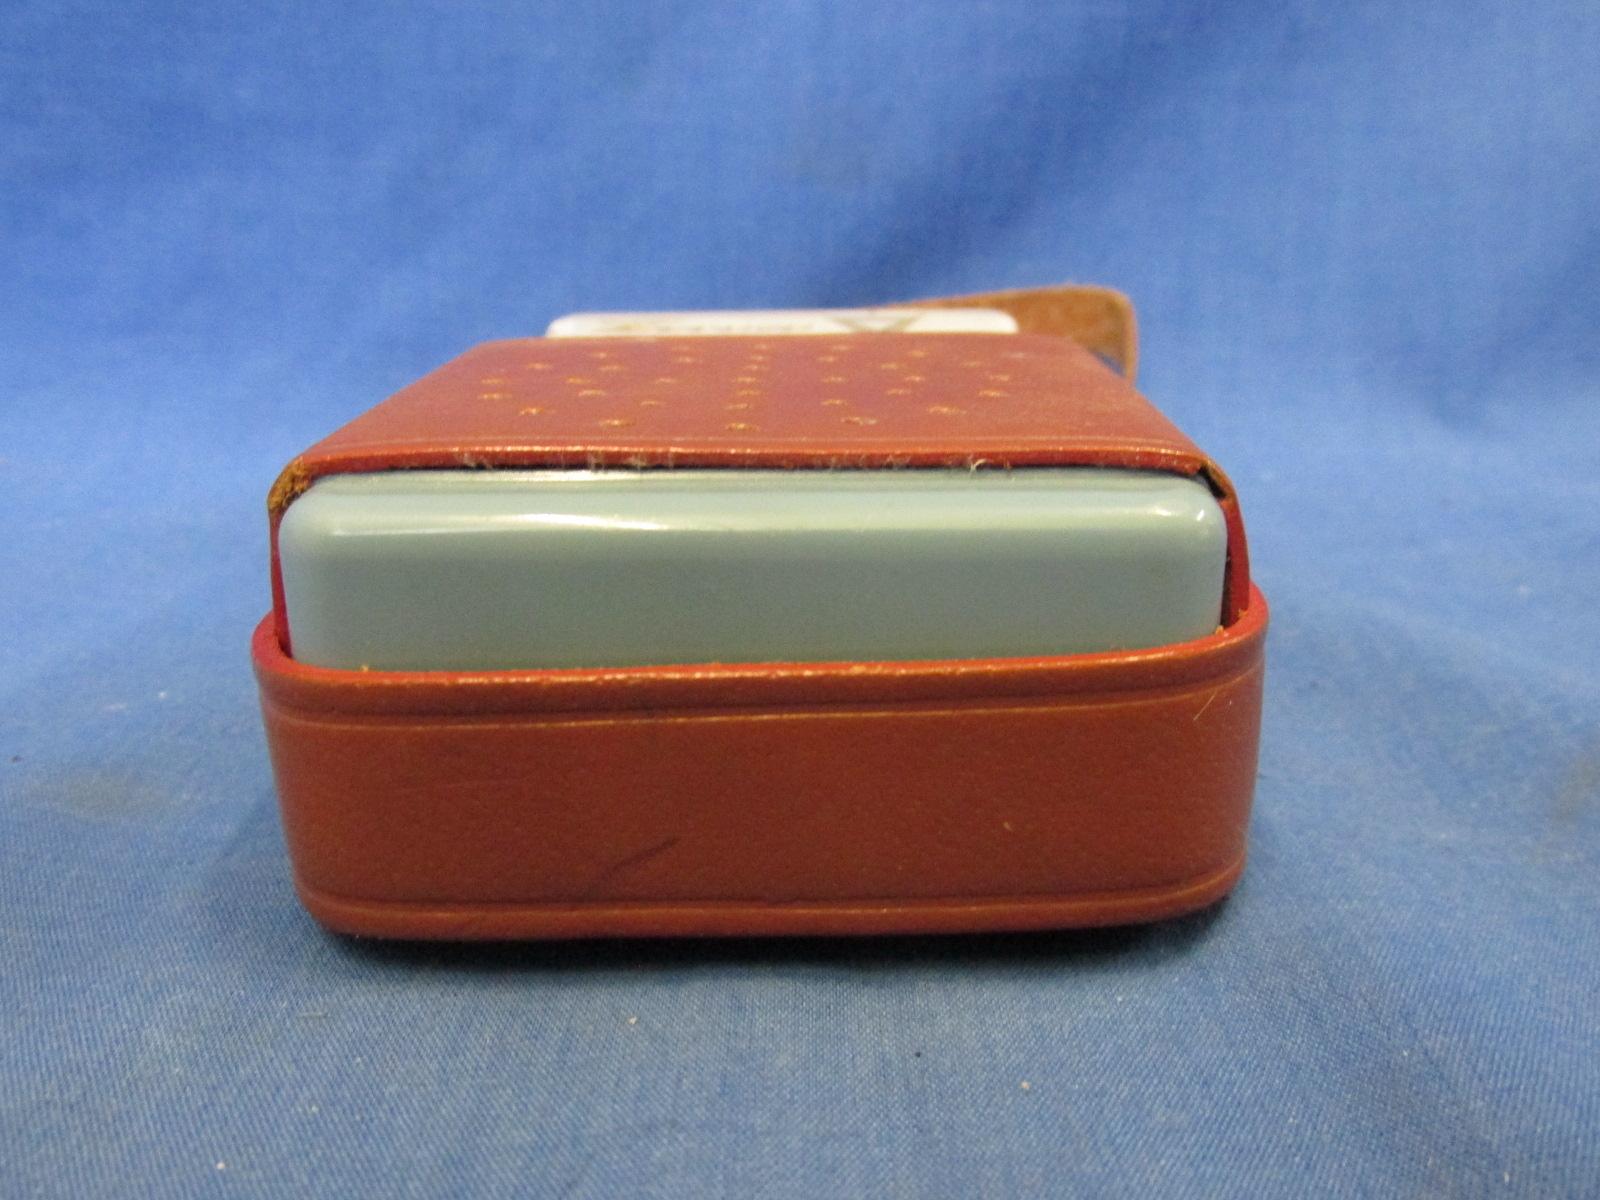 Vintage Zephyr 6- Transistor Radio – Model ZR-620 – Made in 1961 -4 1/8” T x 2 3/4” W